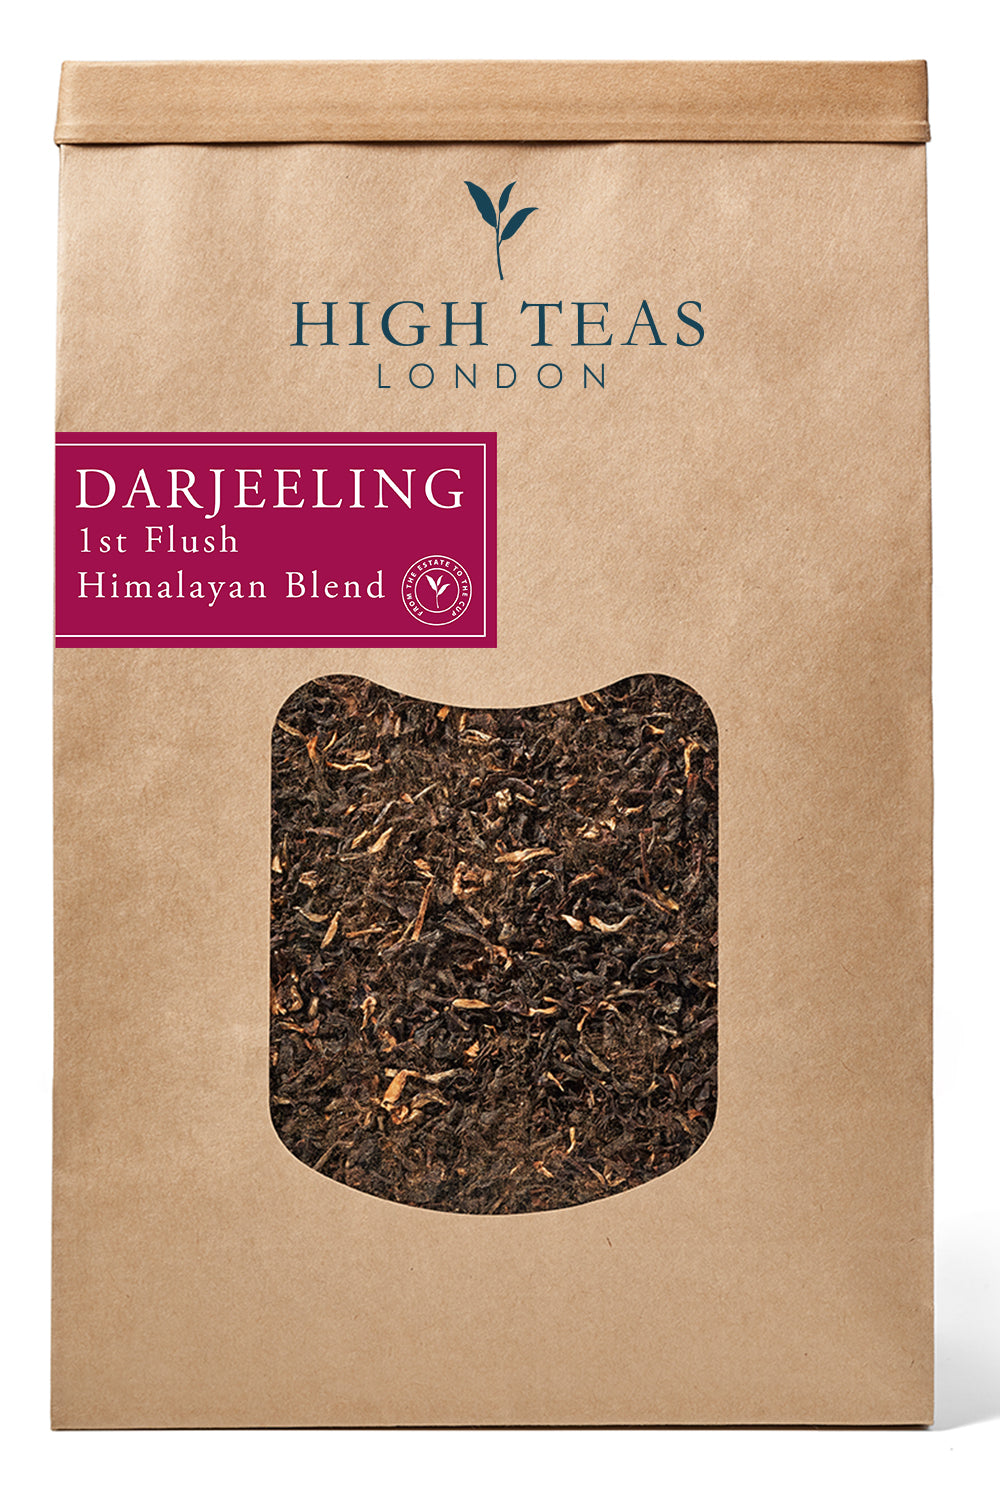 Darjeeling 2nd Flush Himalayan Blend-500g-Loose Leaf Tea-High Teas